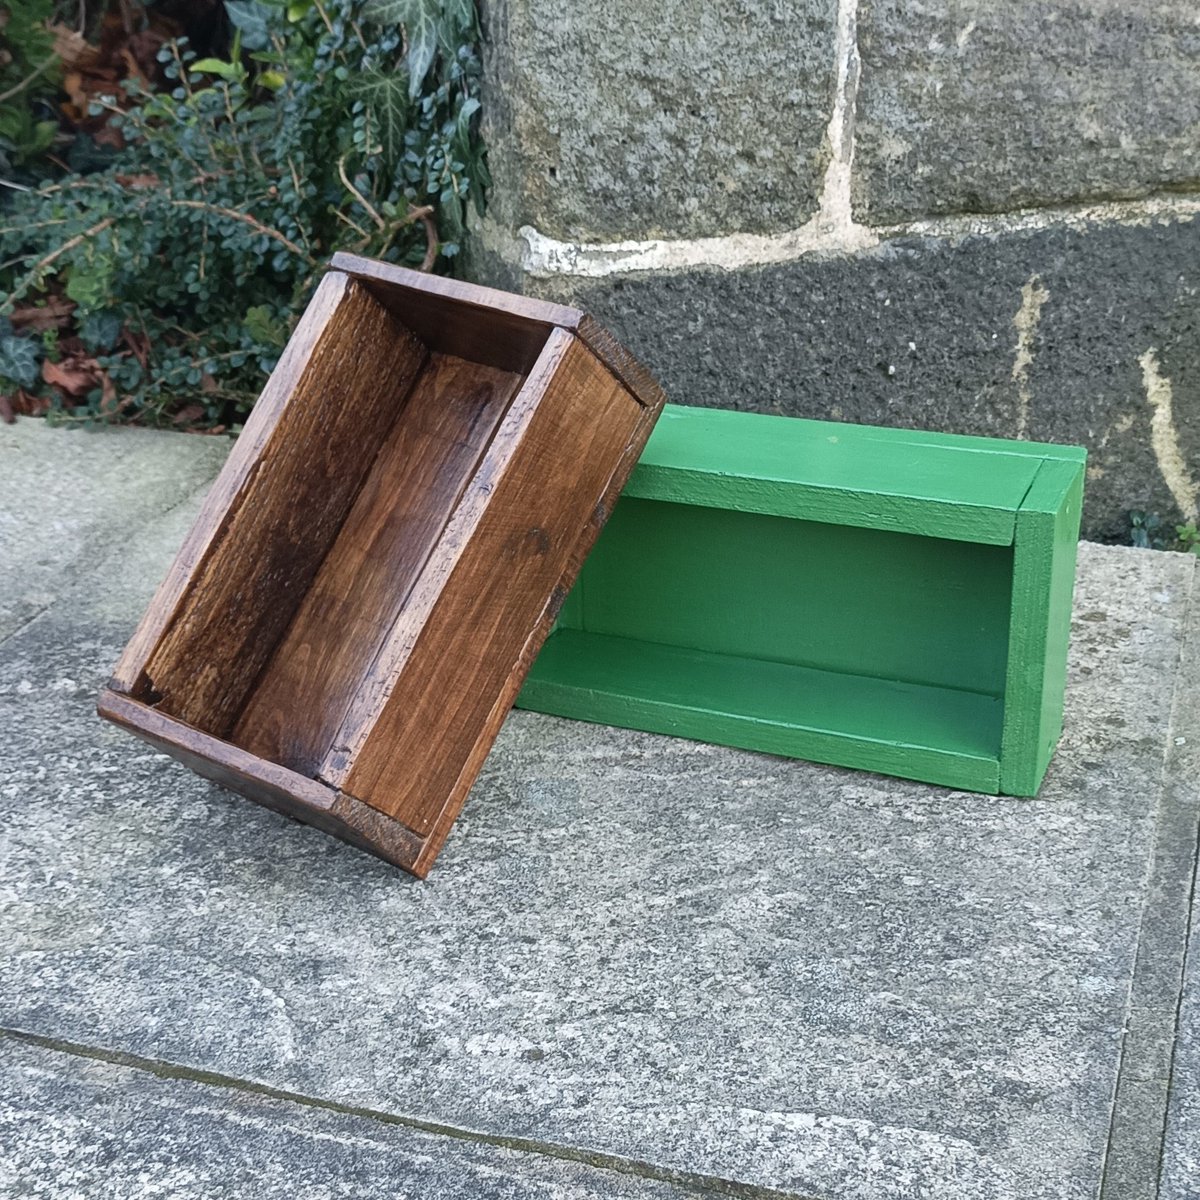 Mini storage boxes - handmade in Leeds using repurposed wood. What would you keep in yours? #HandmadeHour @HandmadeHour #buyleeds #shopindie